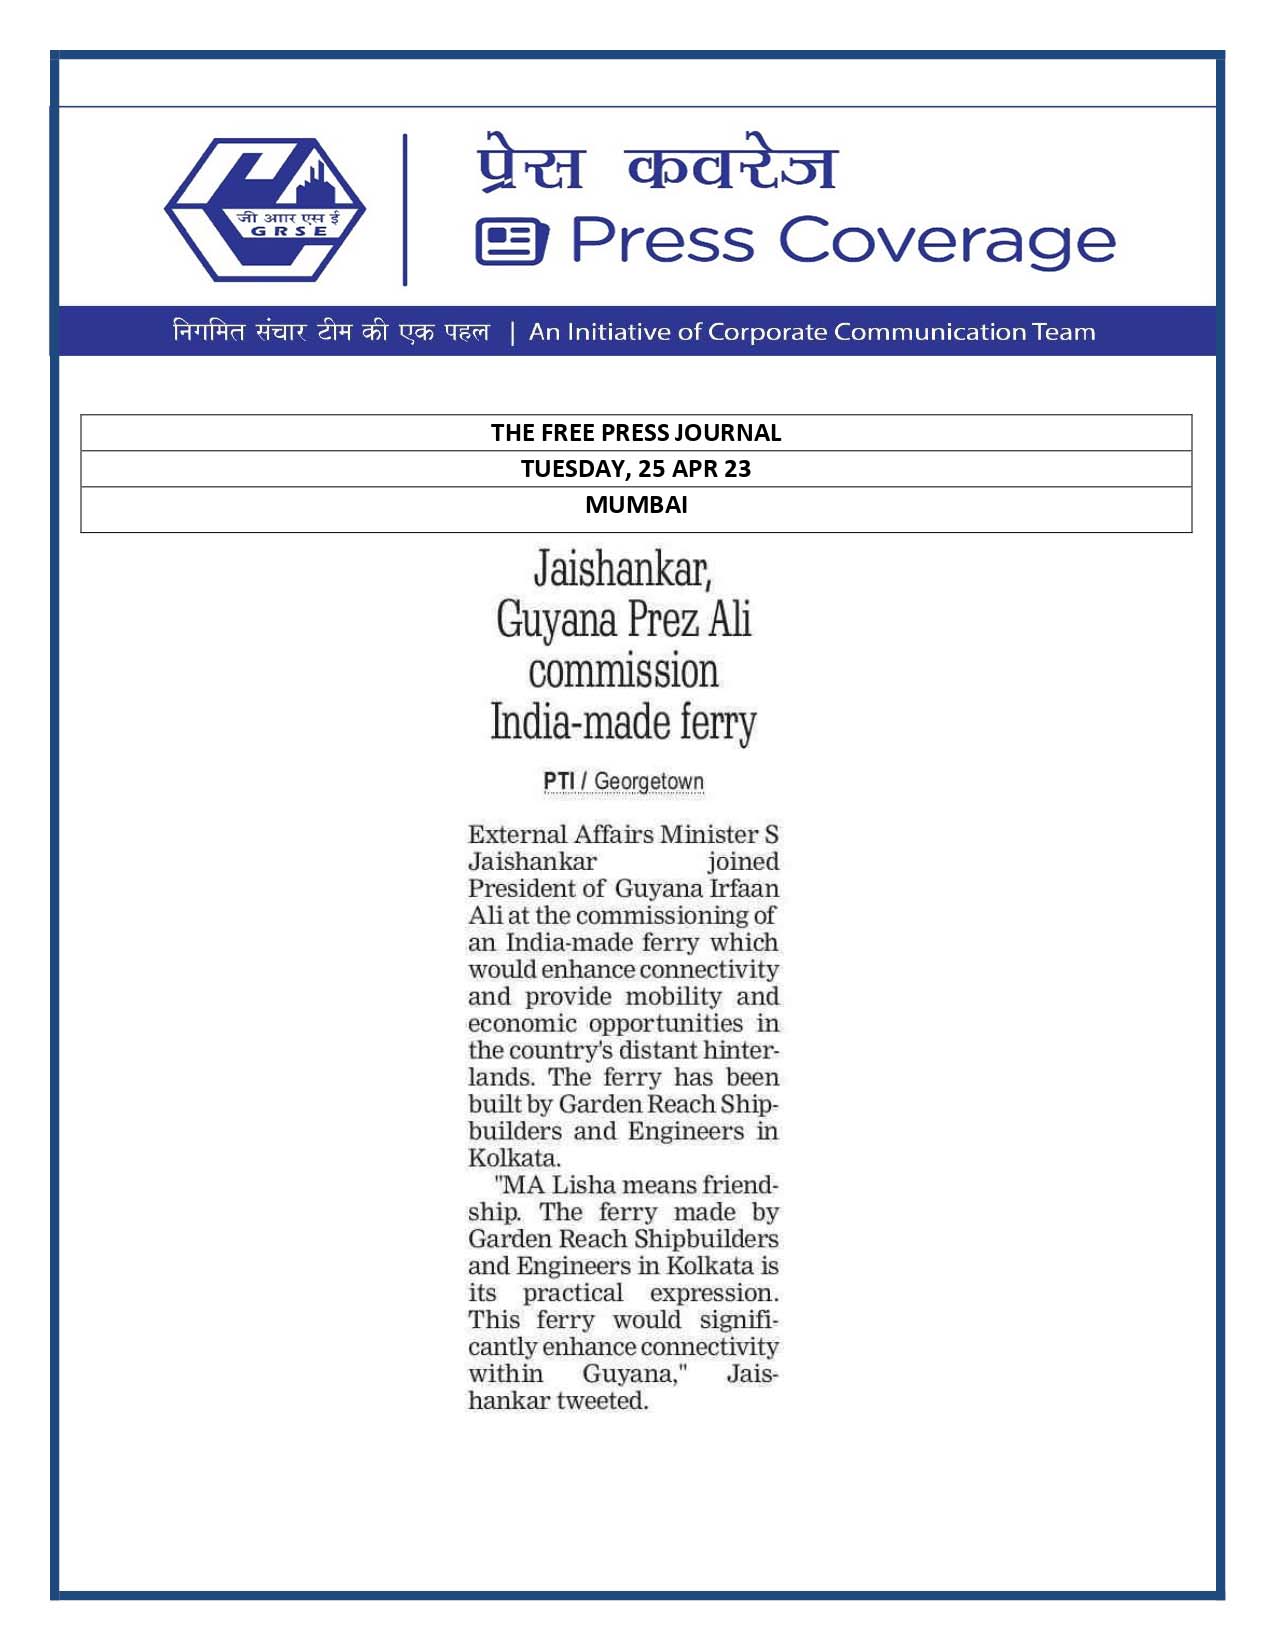 The Free Press Journal 25 Apr 23